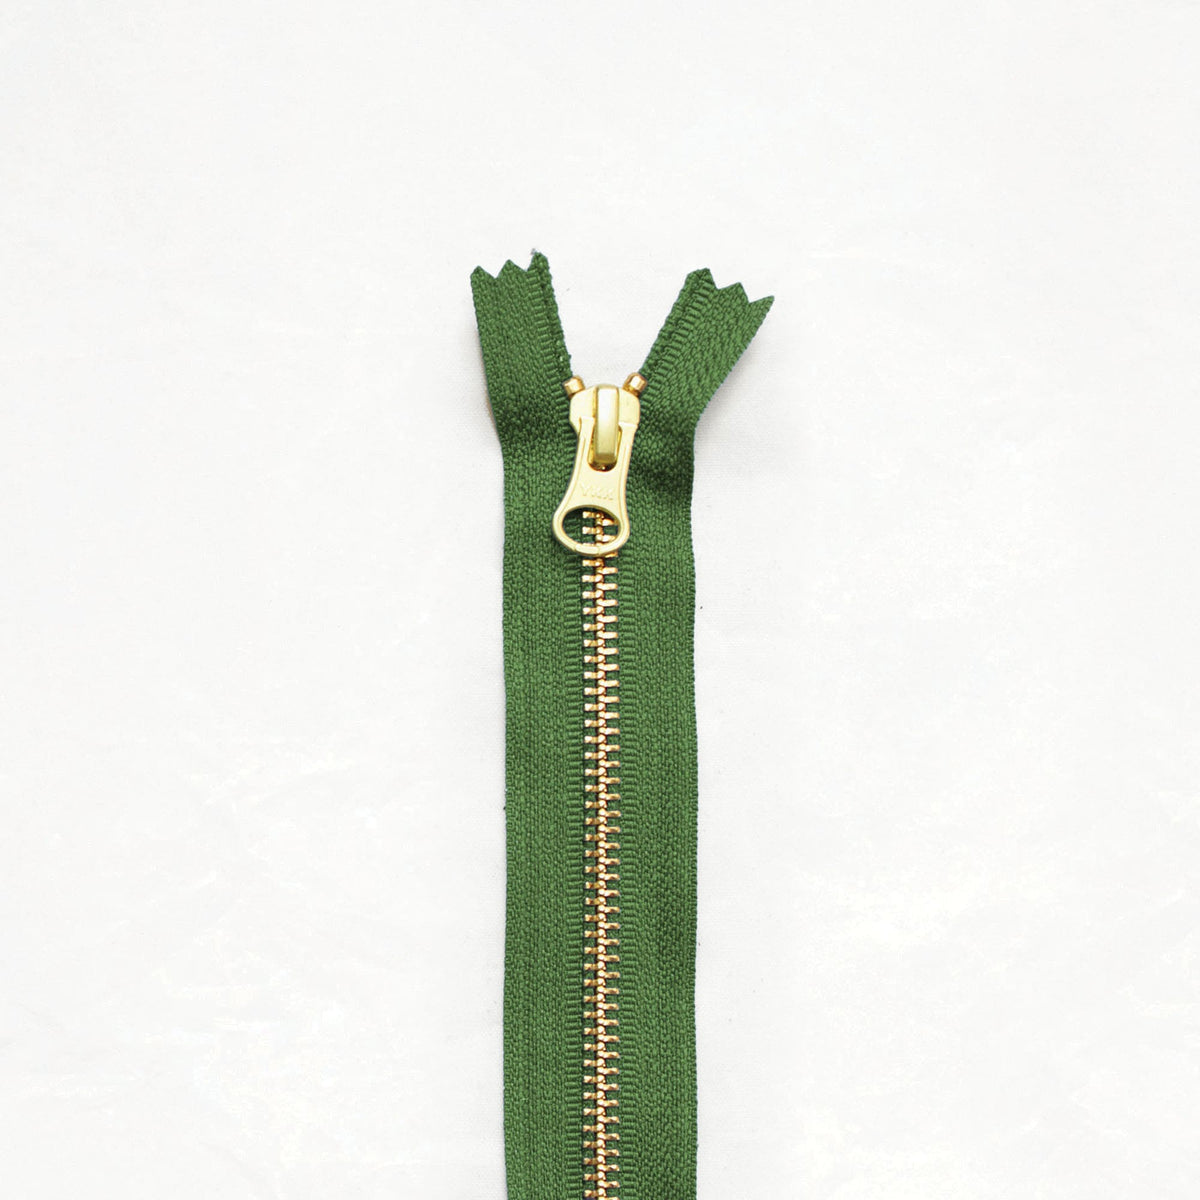 14" Brass Zippers - Wholesale